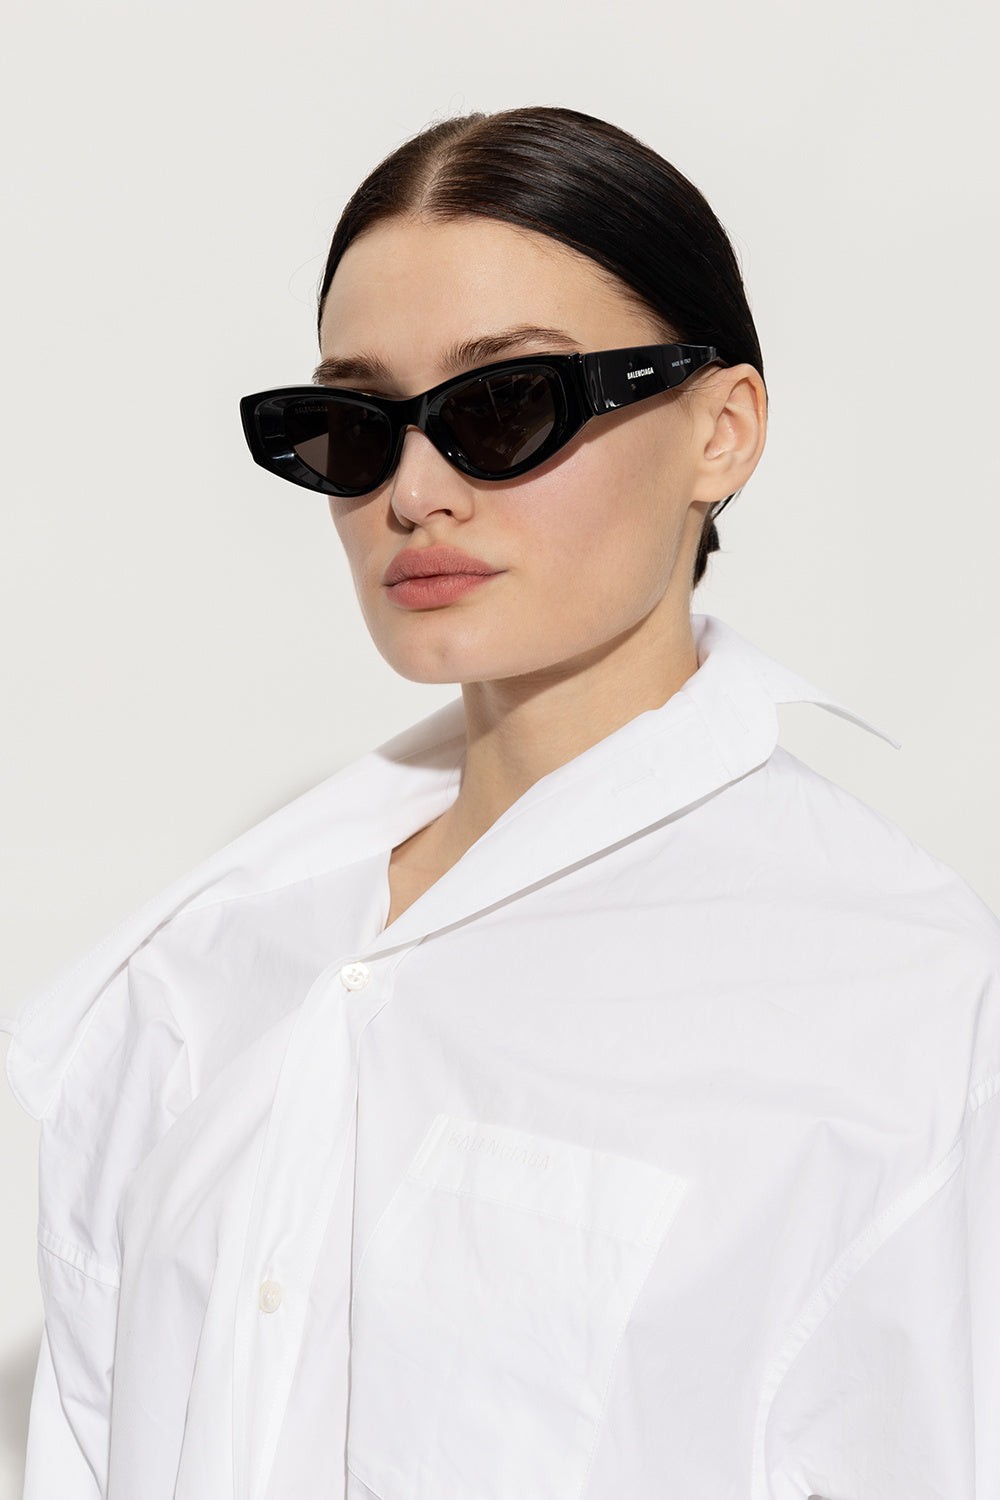 Balenciaga Sunglasses BB0096S 005 Black White grey Woman  eBay